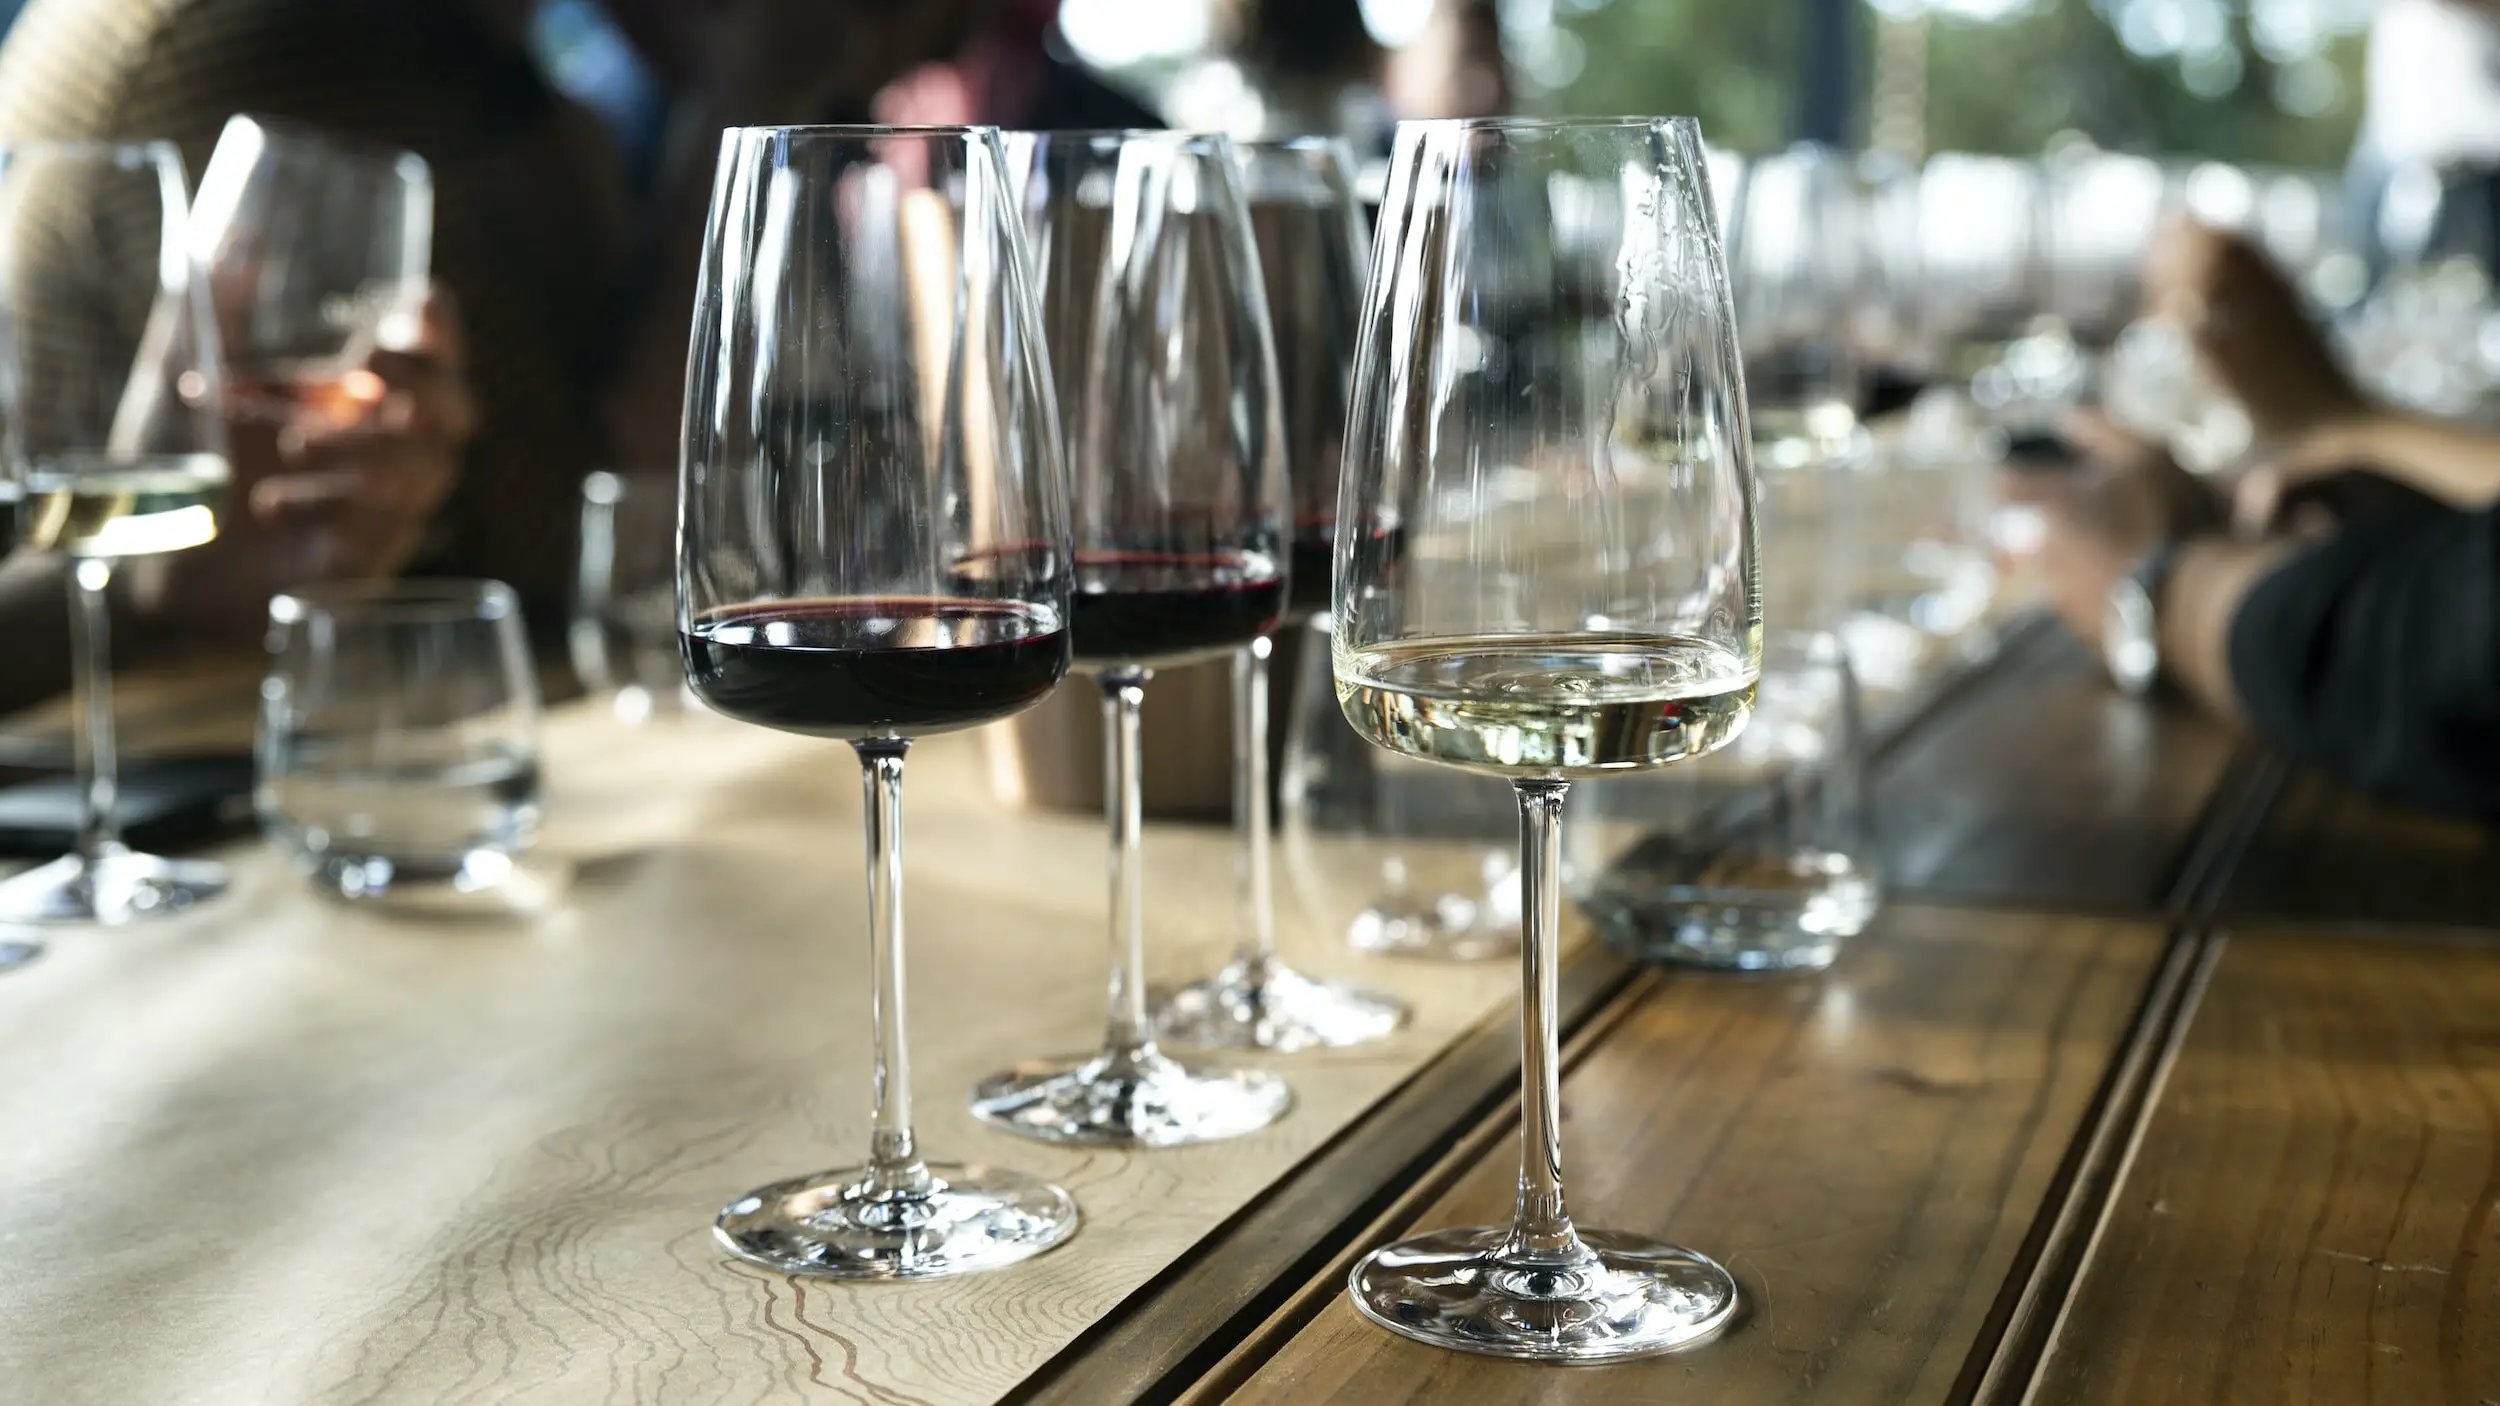 taste wine properly - wine glasses